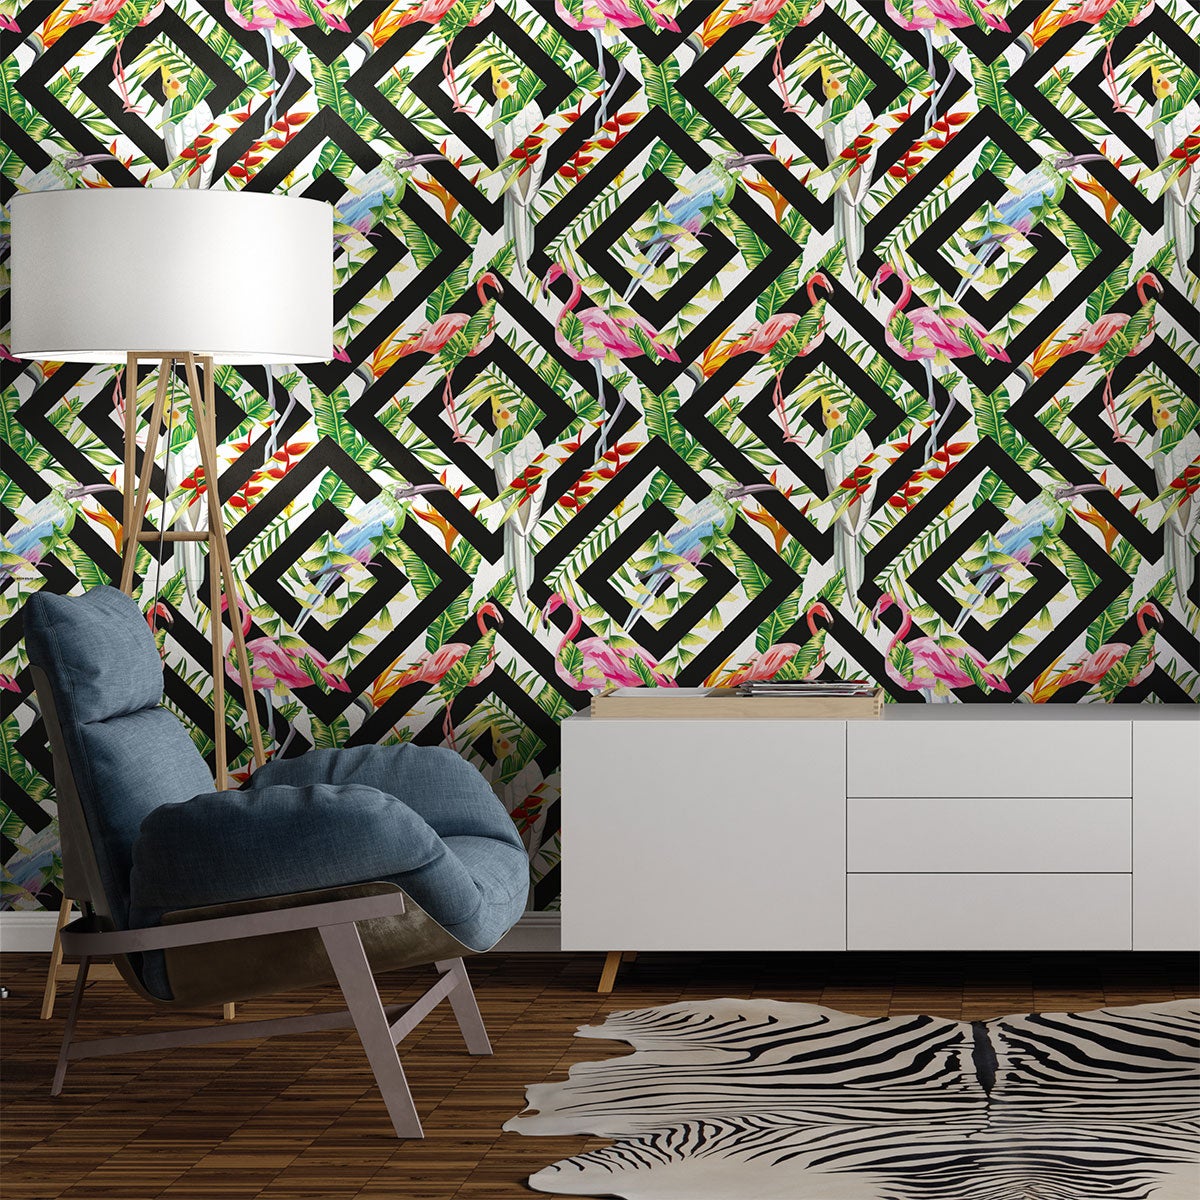 Vinilo papel tapiz tropical jungle - adhesivo de pared - revestimiento  sticker mural decorativo - 60x60cm